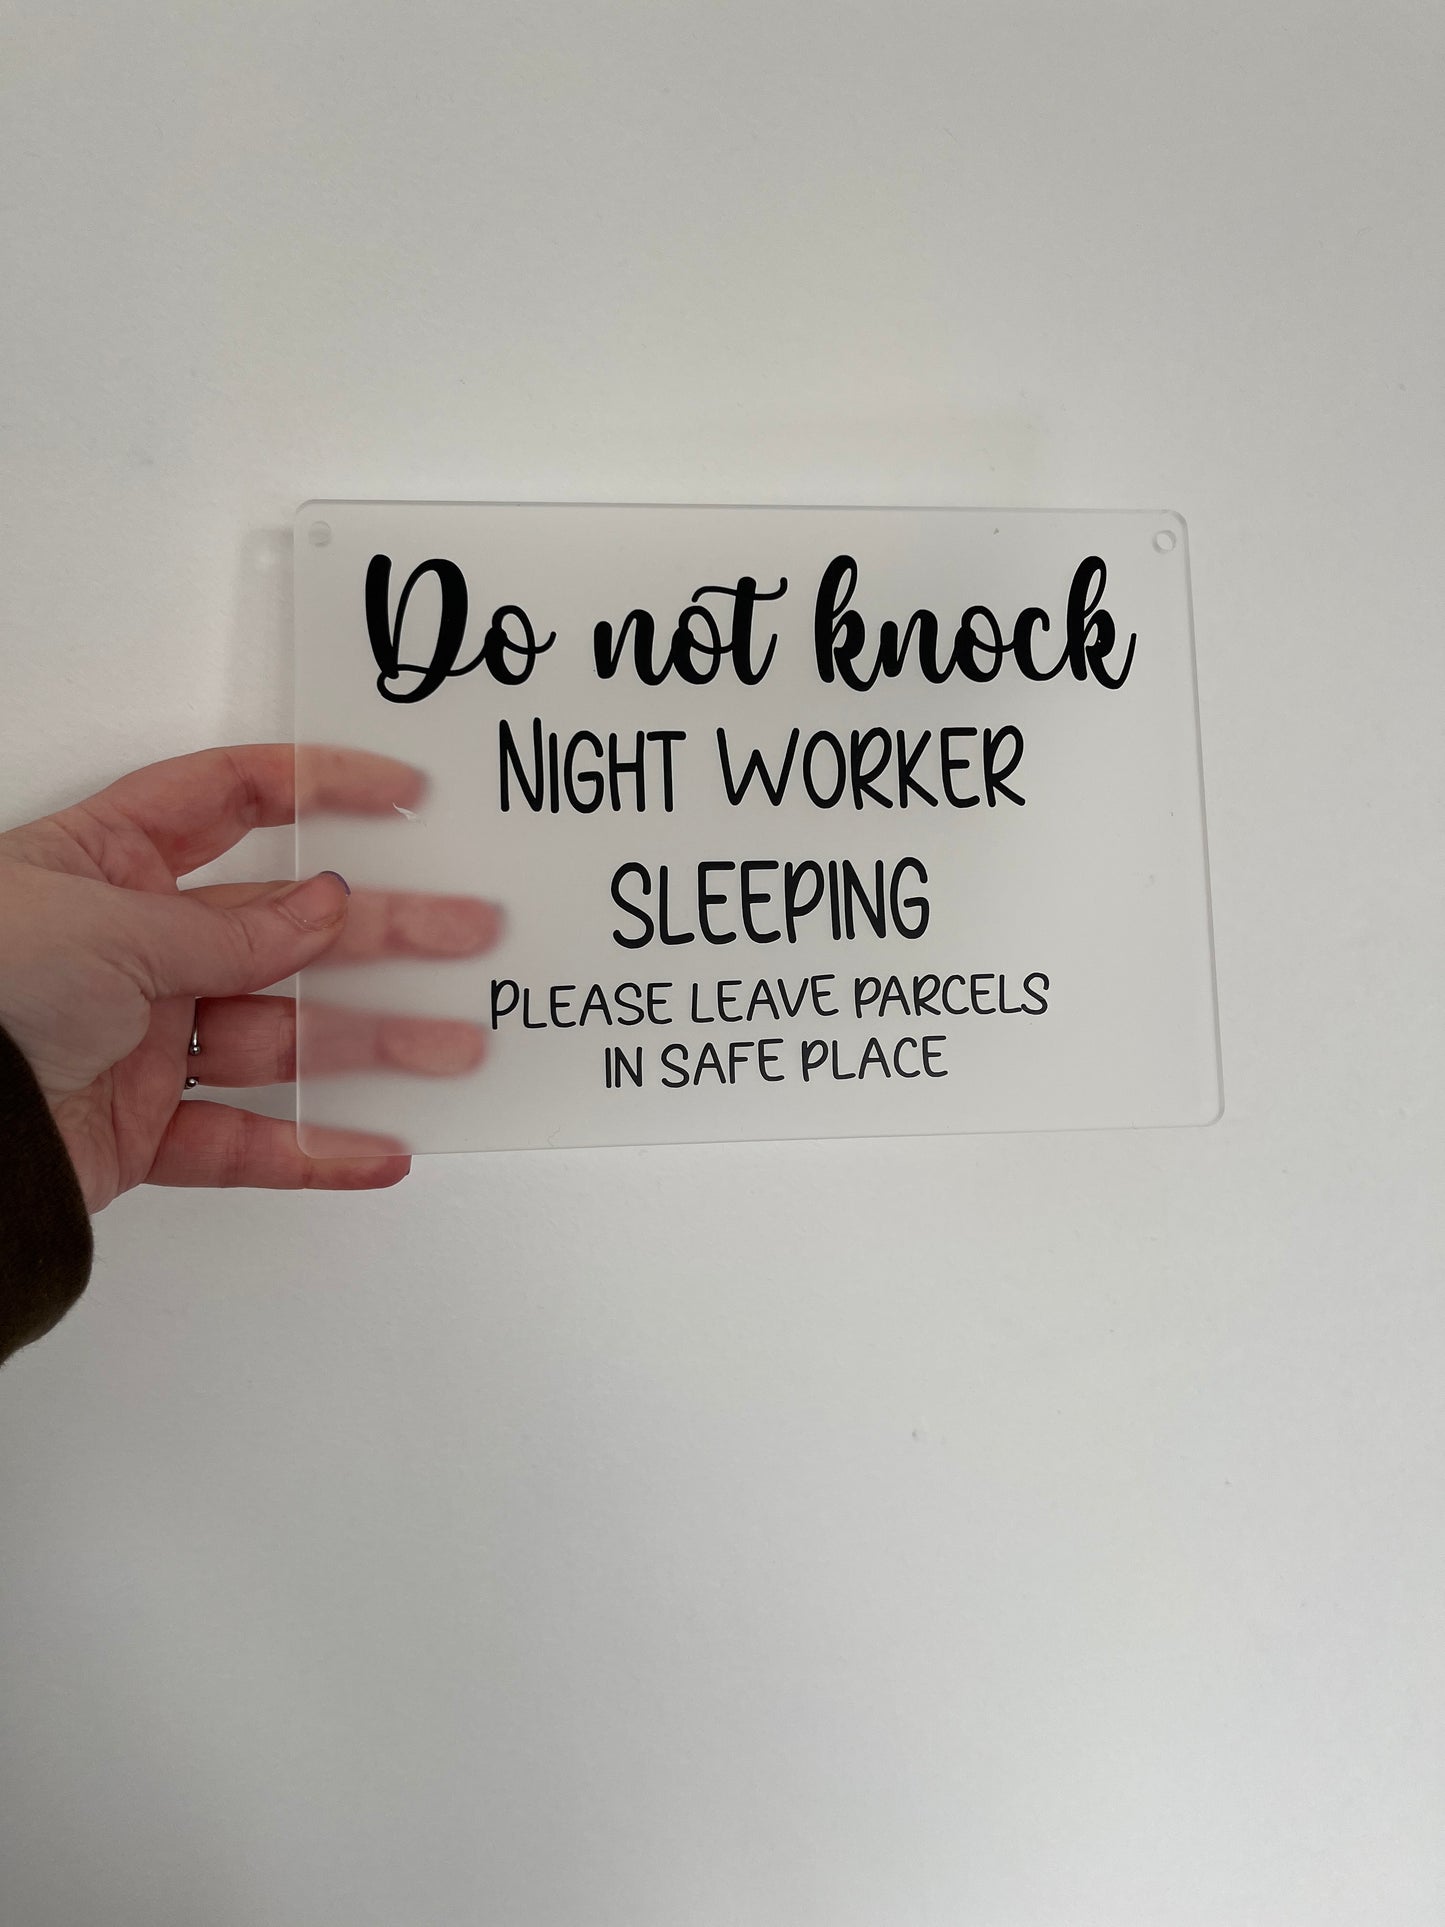 Night Worker Do not disturb sign